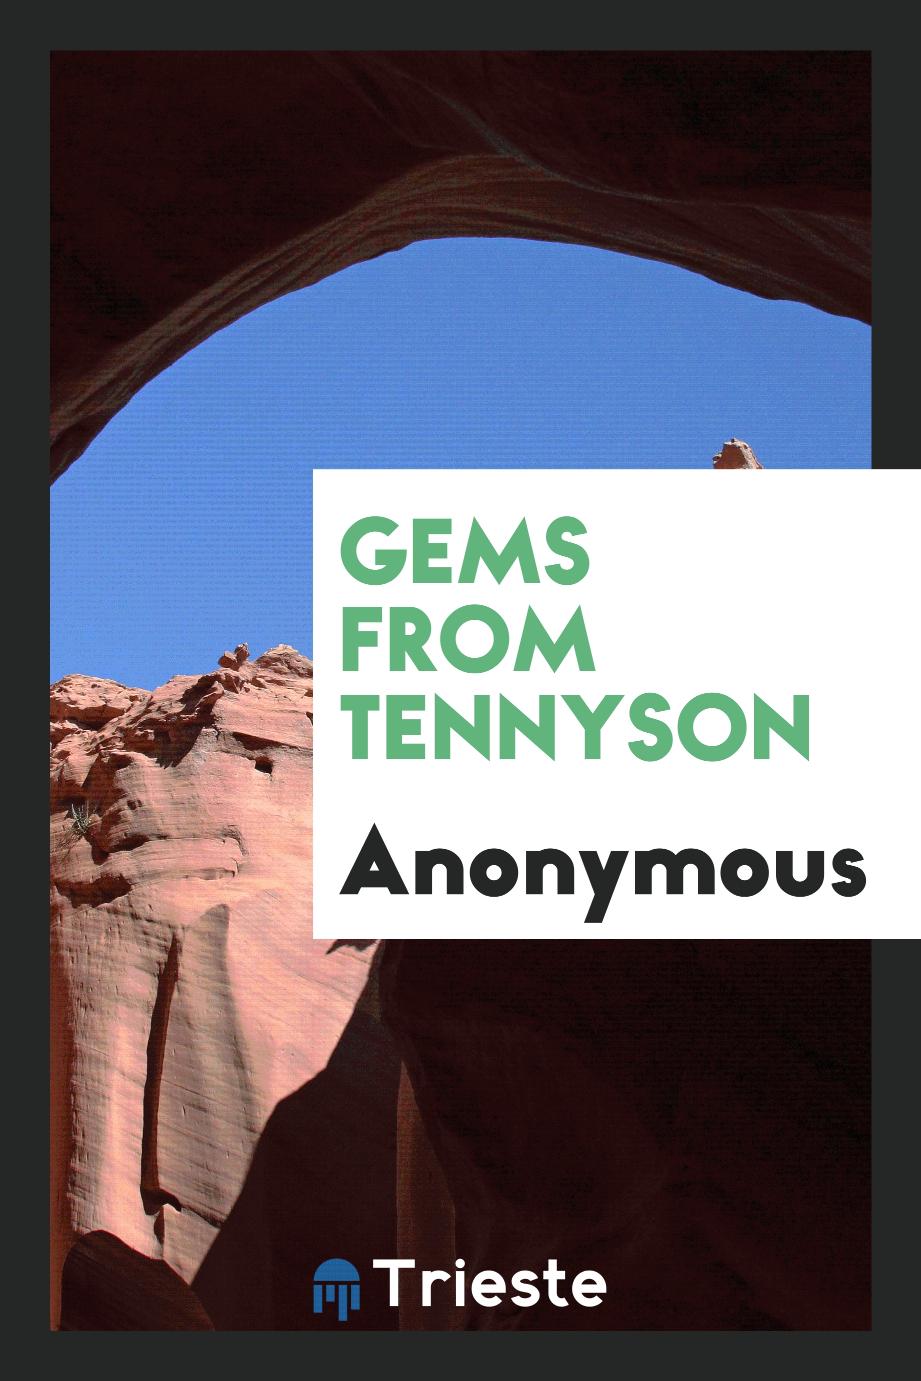 Gems from Tennyson